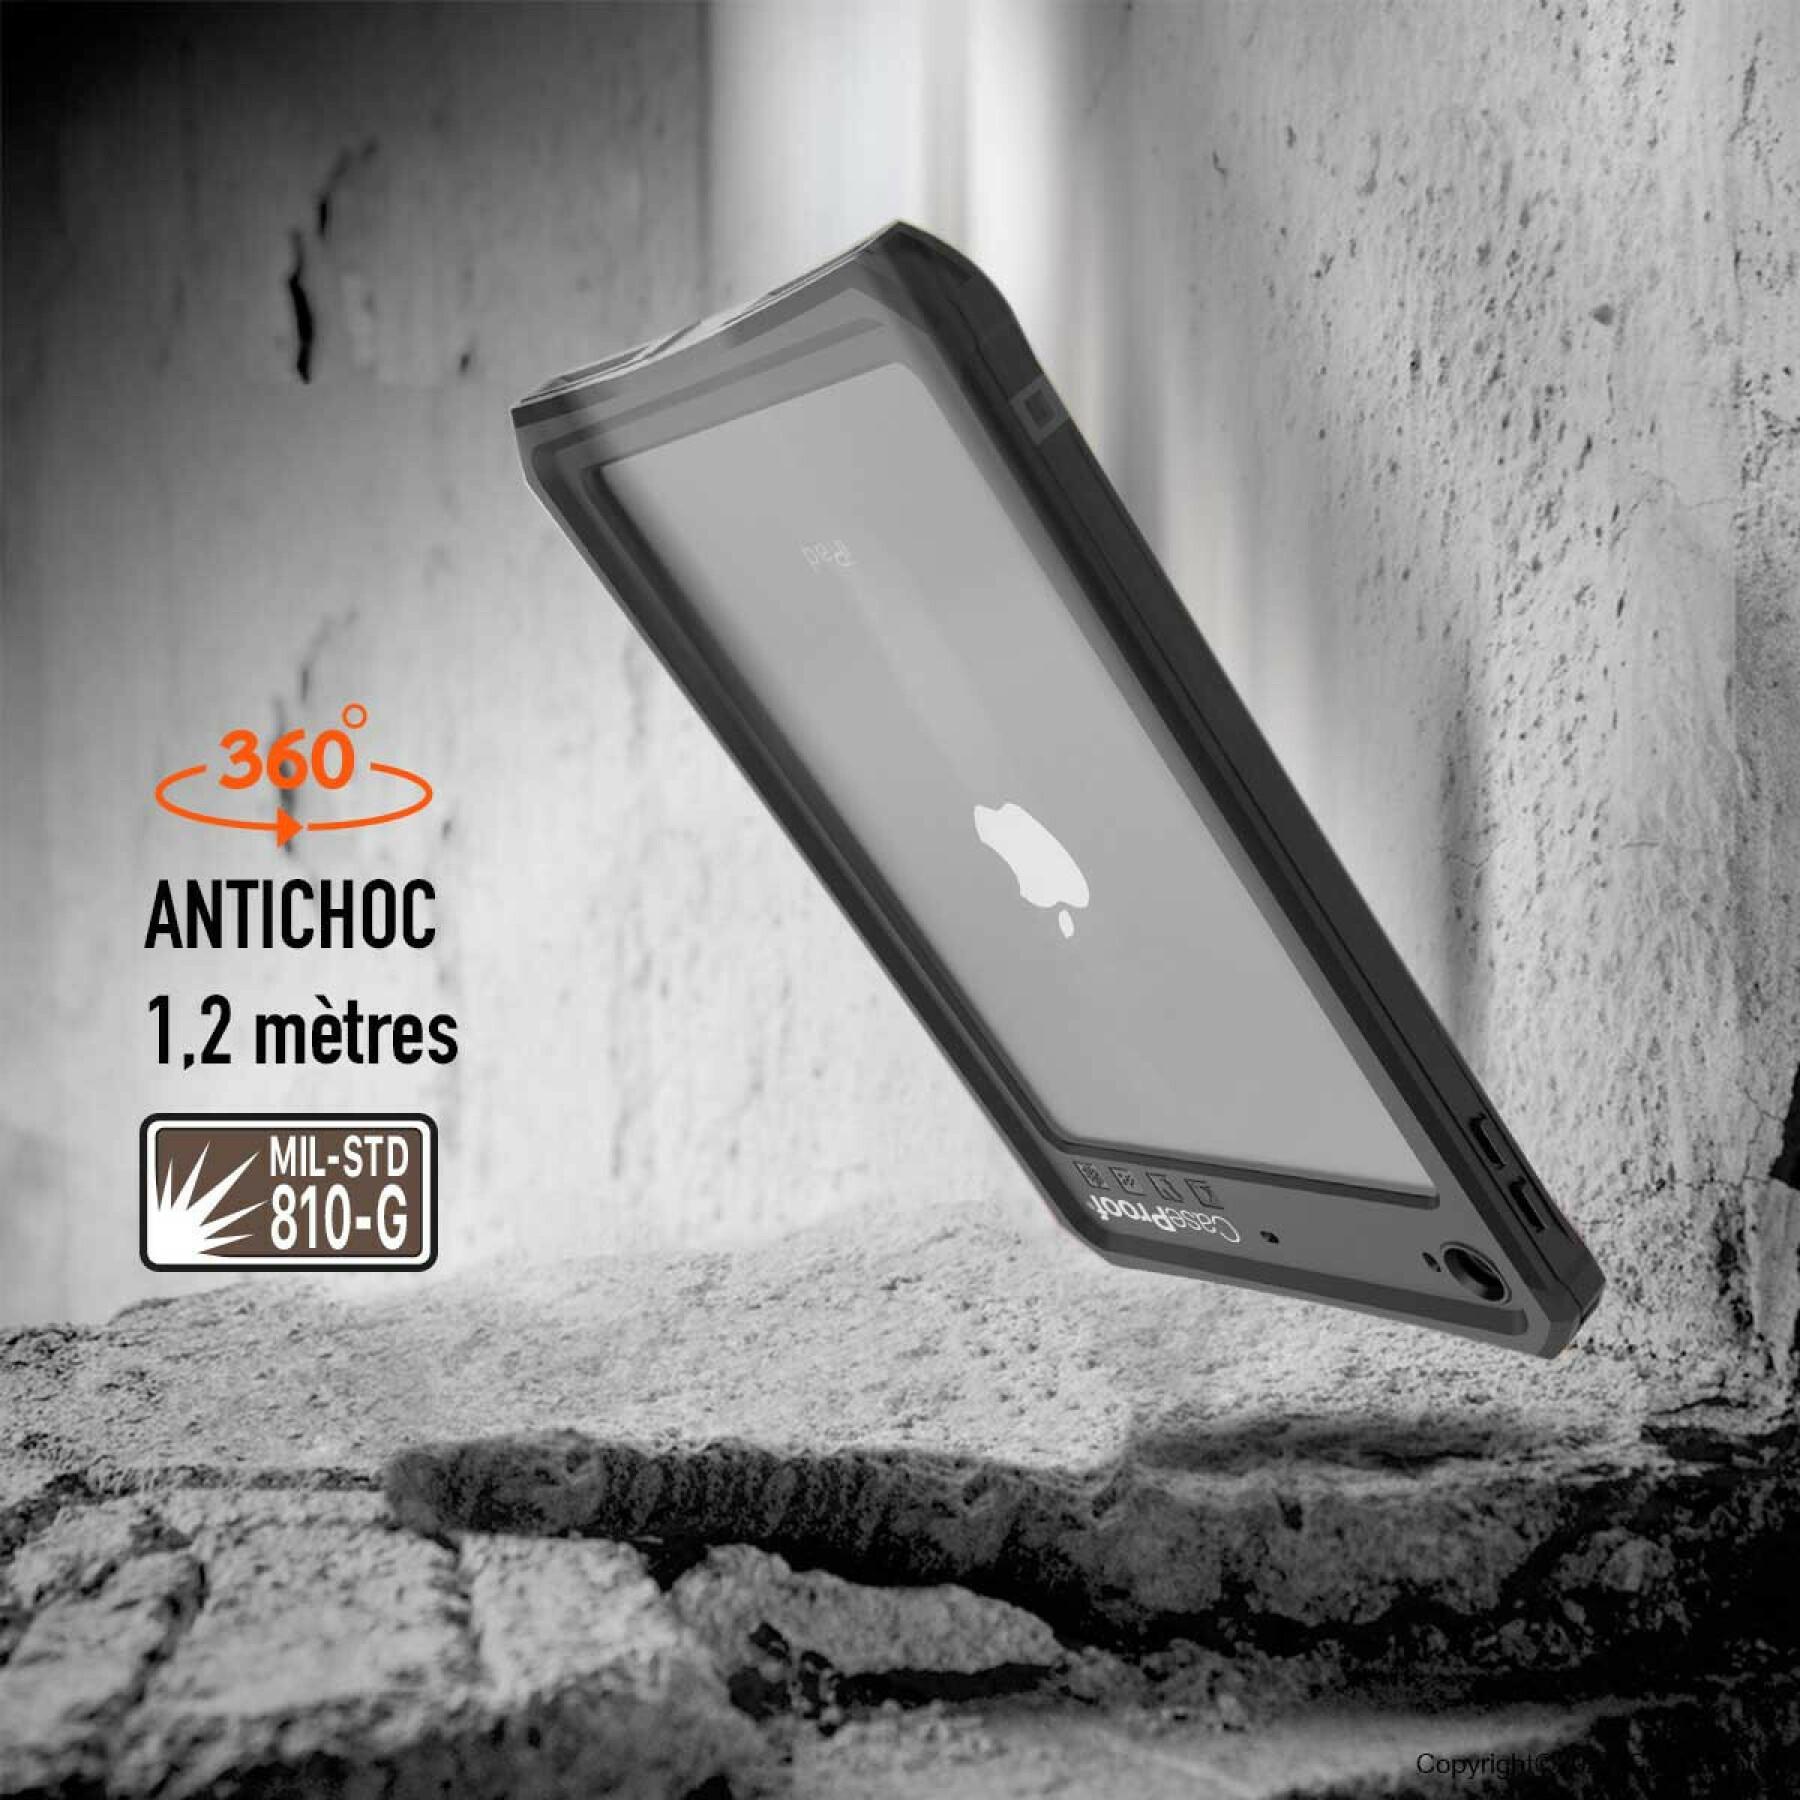 Waterproof and shockproof ipad mini 4/5 smartphone case CaseProof